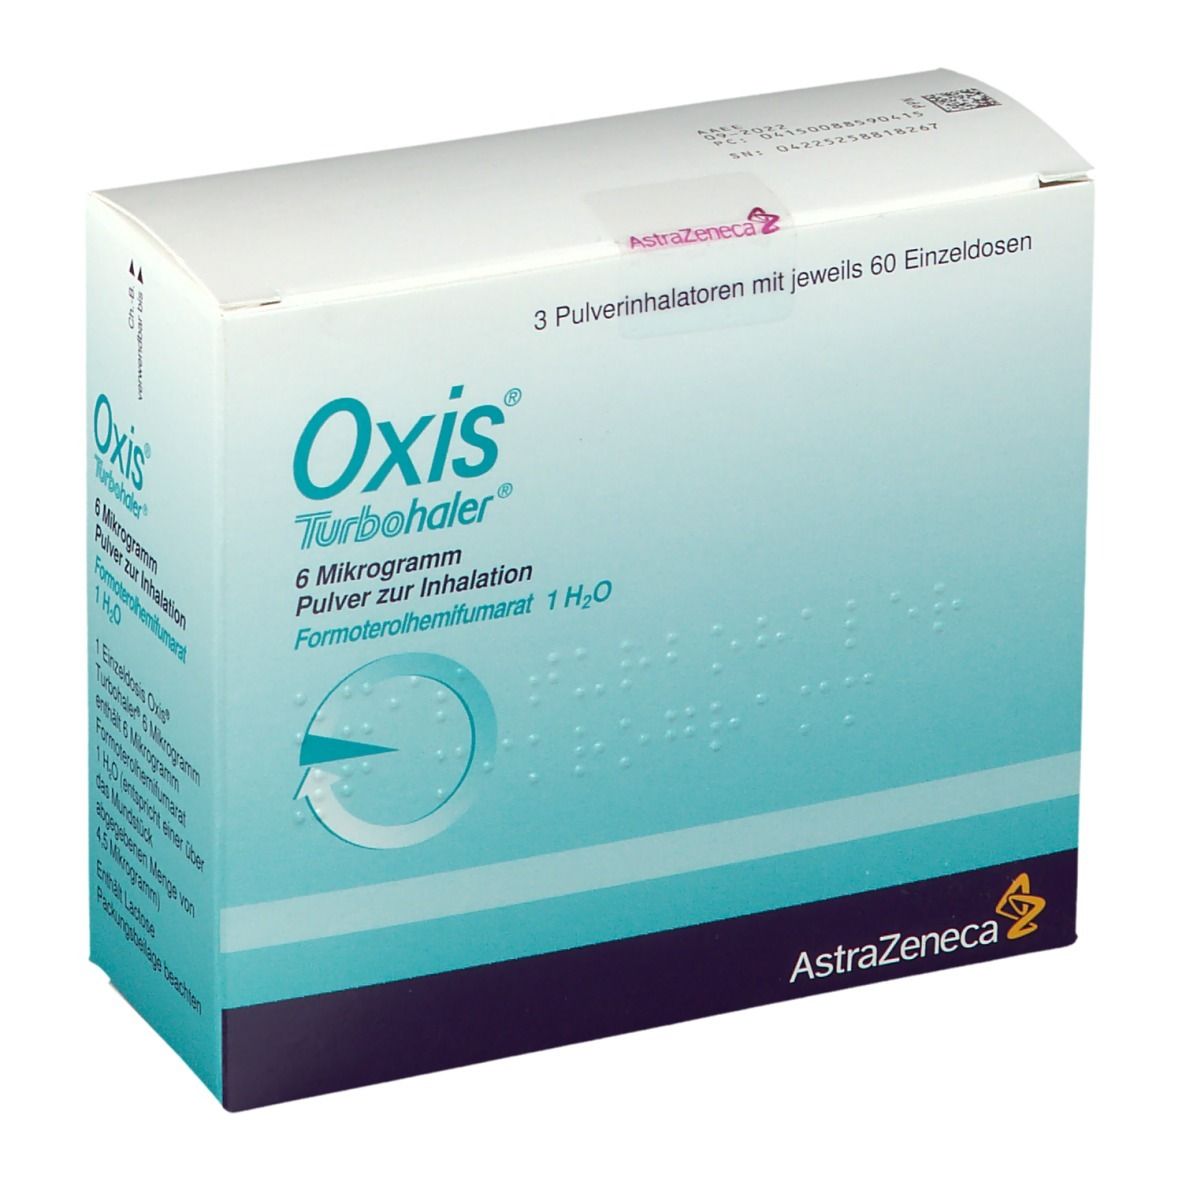 Oxis® Turbohaler  6 µg 60